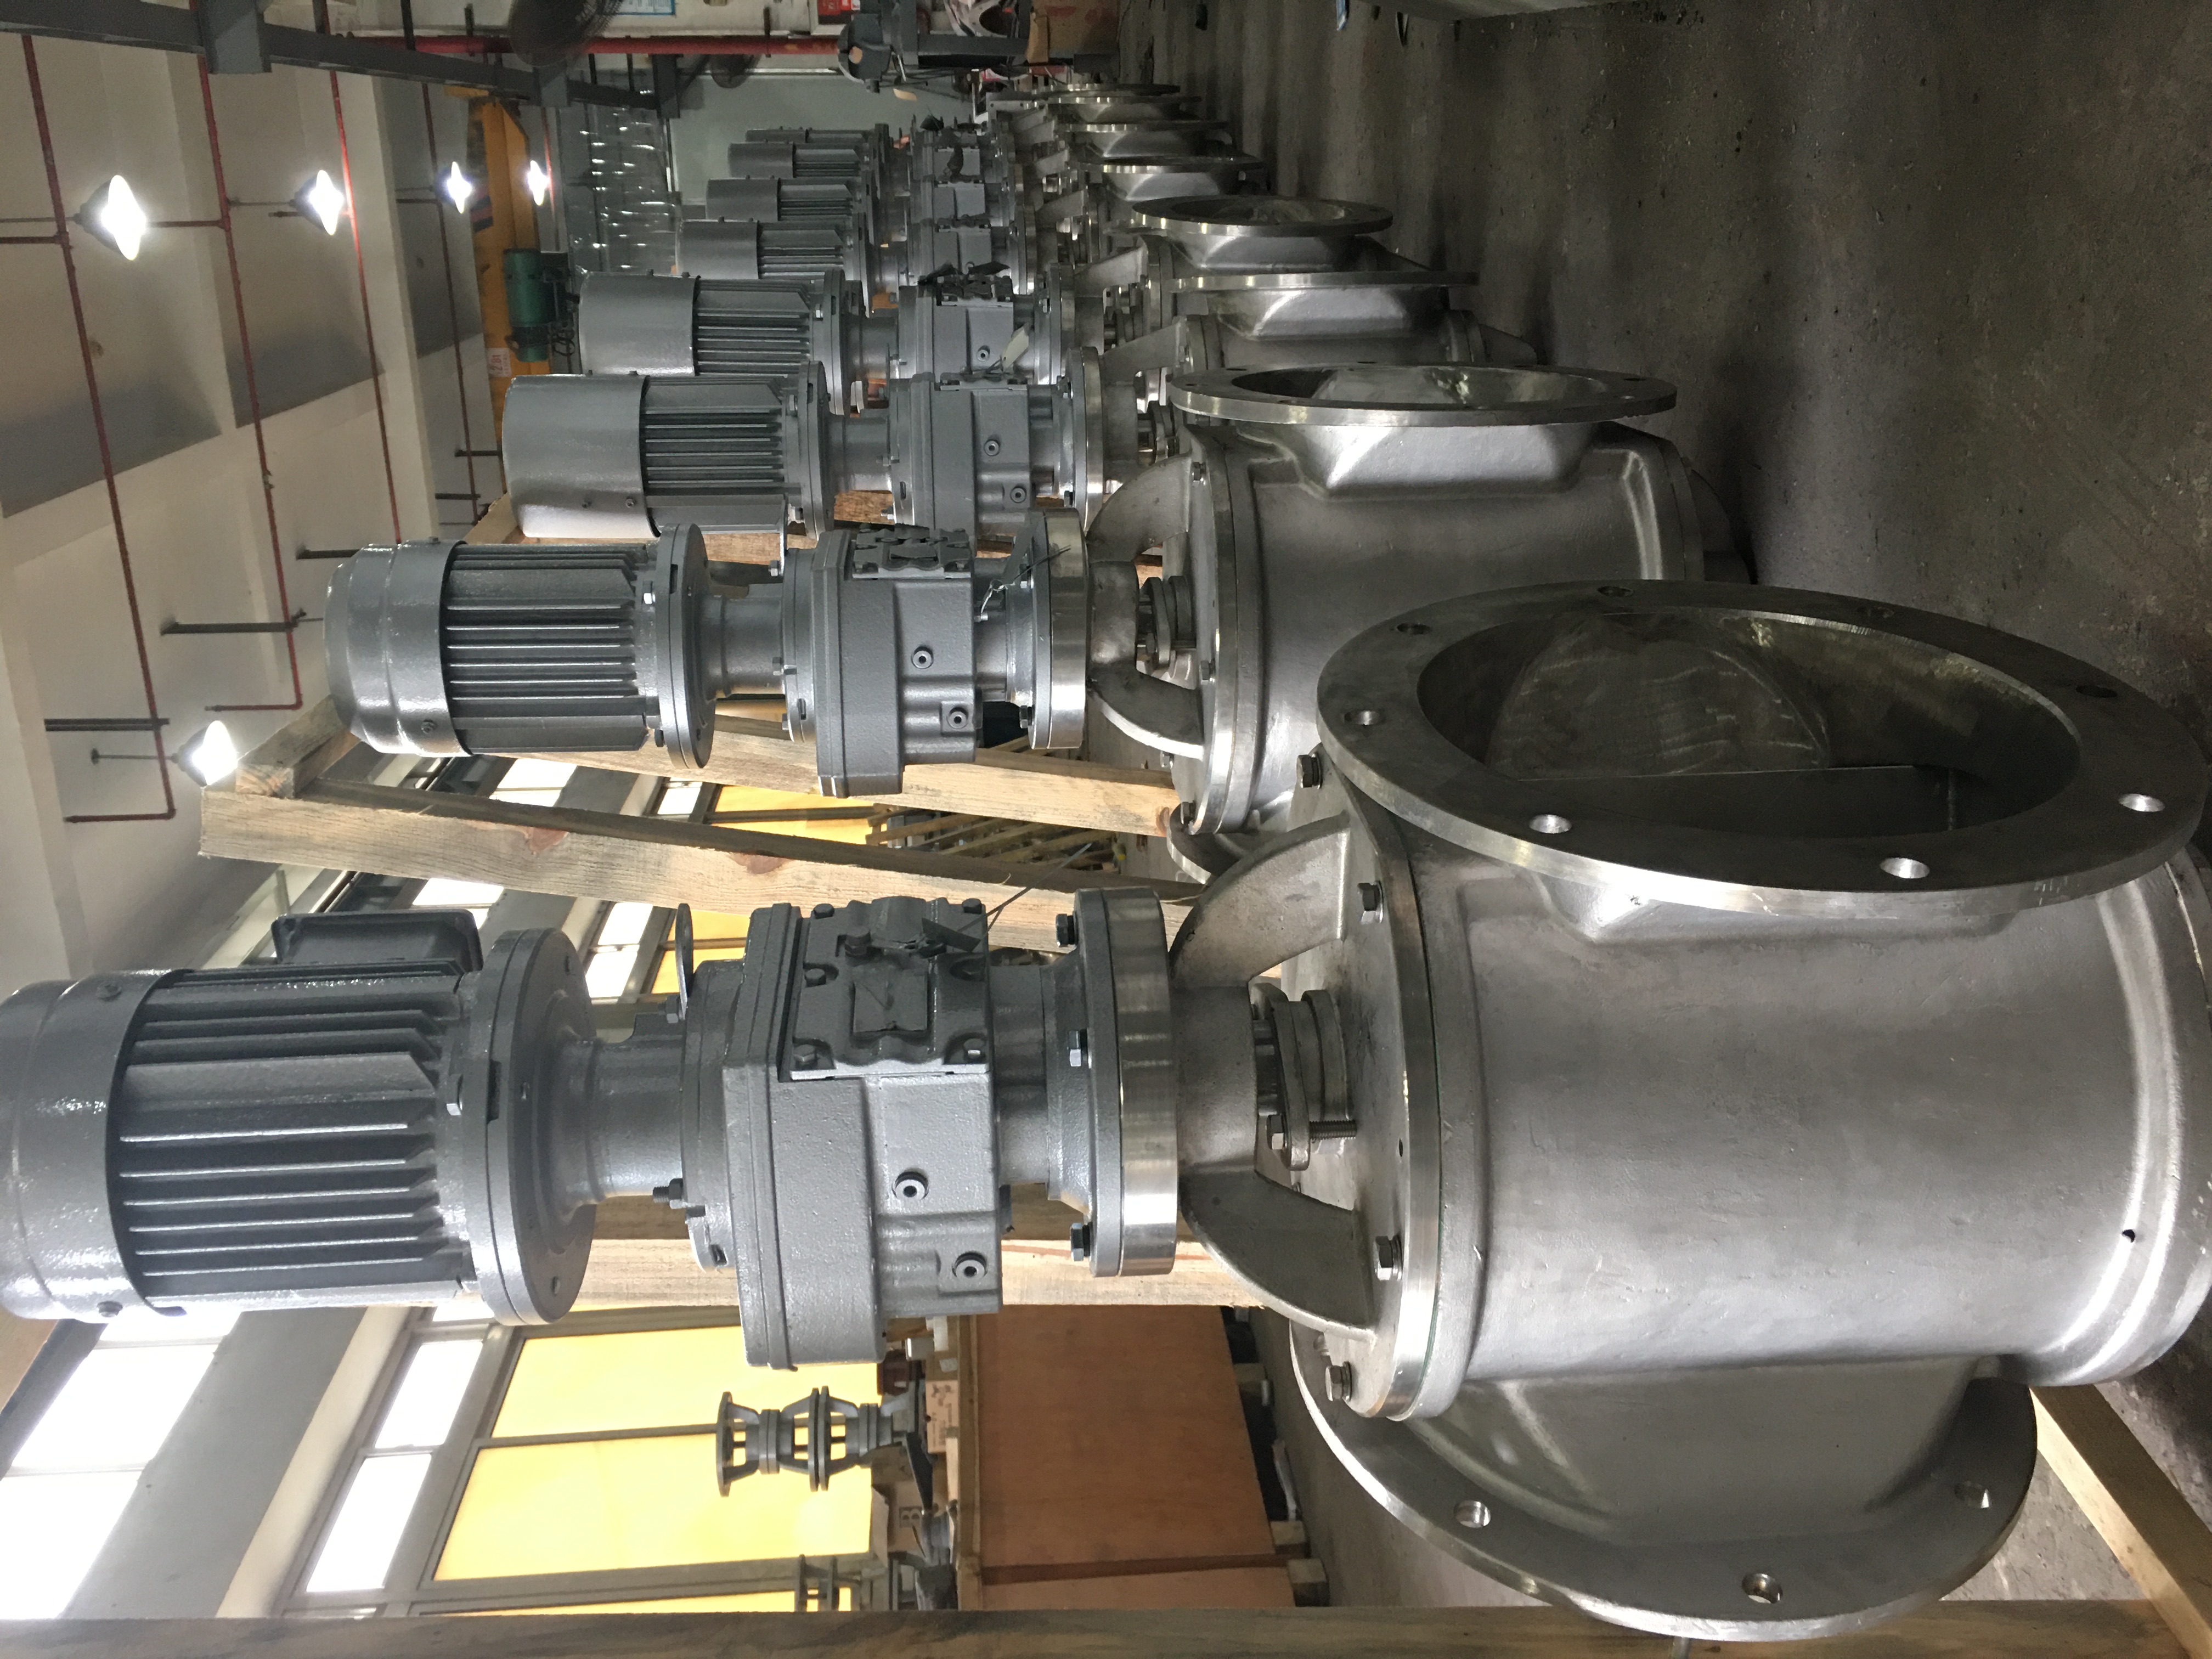 2021 factory customized high capacity industrial rotary airlock feeder valve